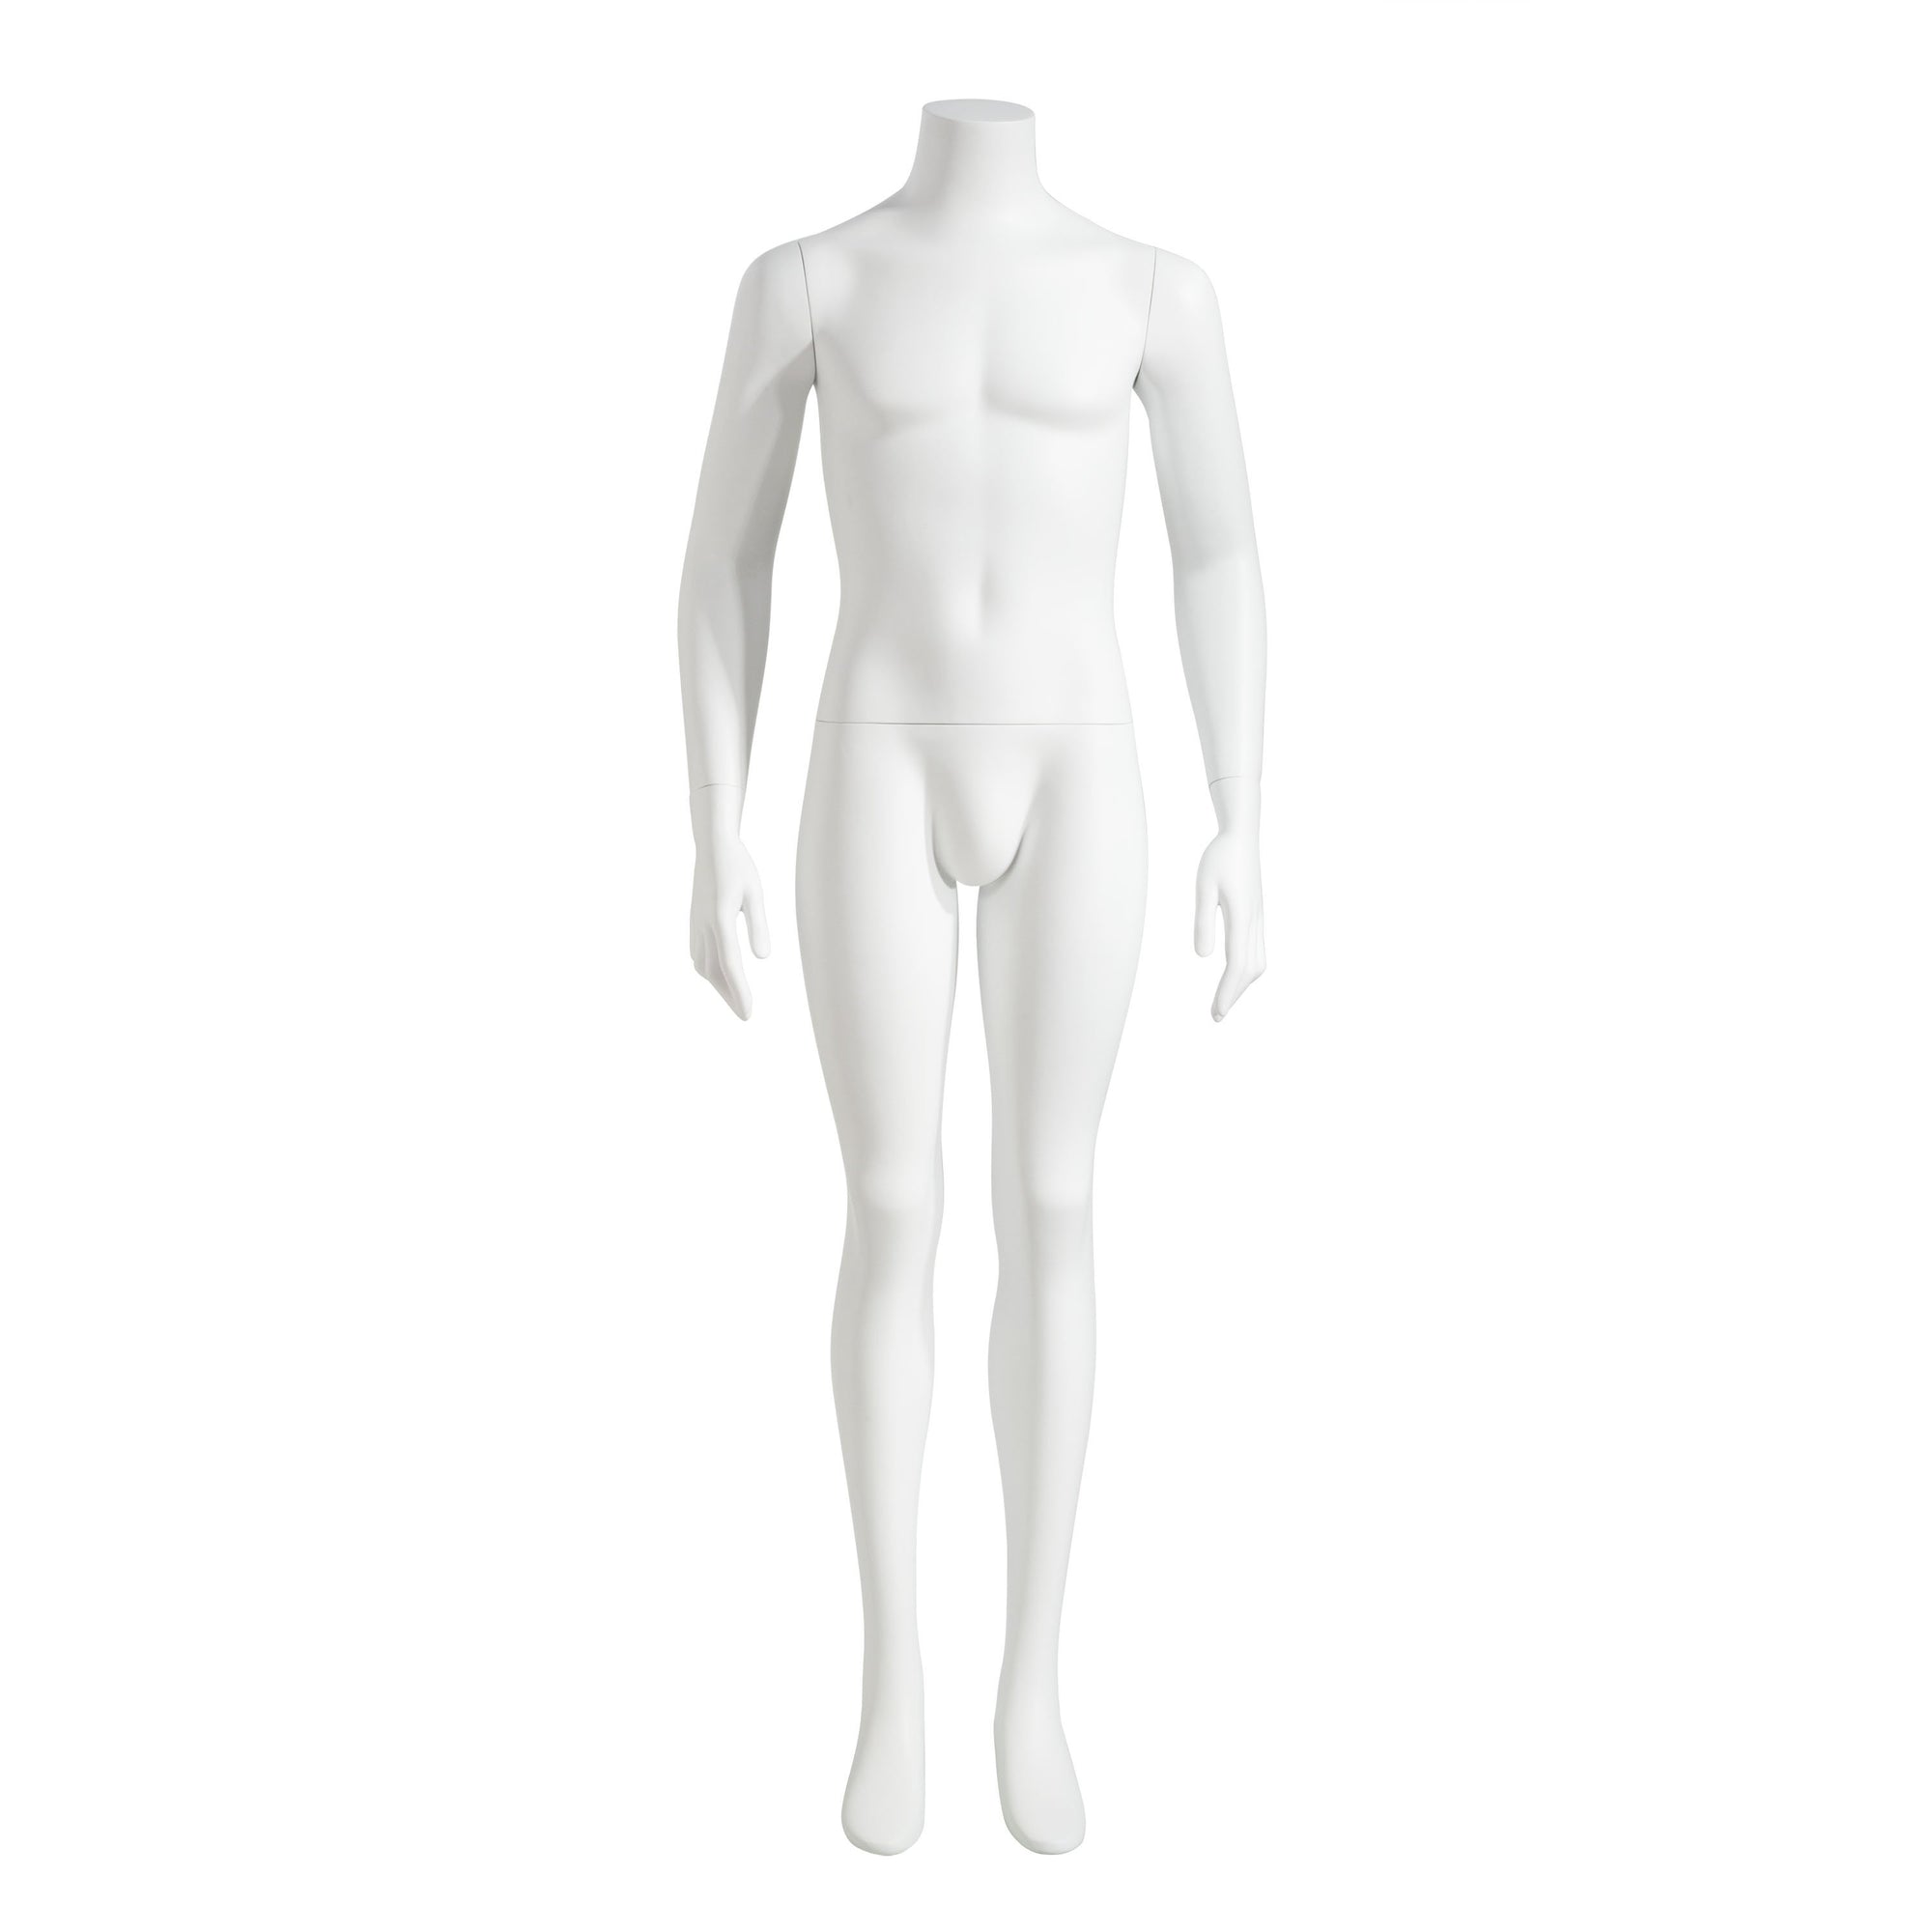 Male Mannequin - Headless, Arms at Sides - Las Vegas Mannequins